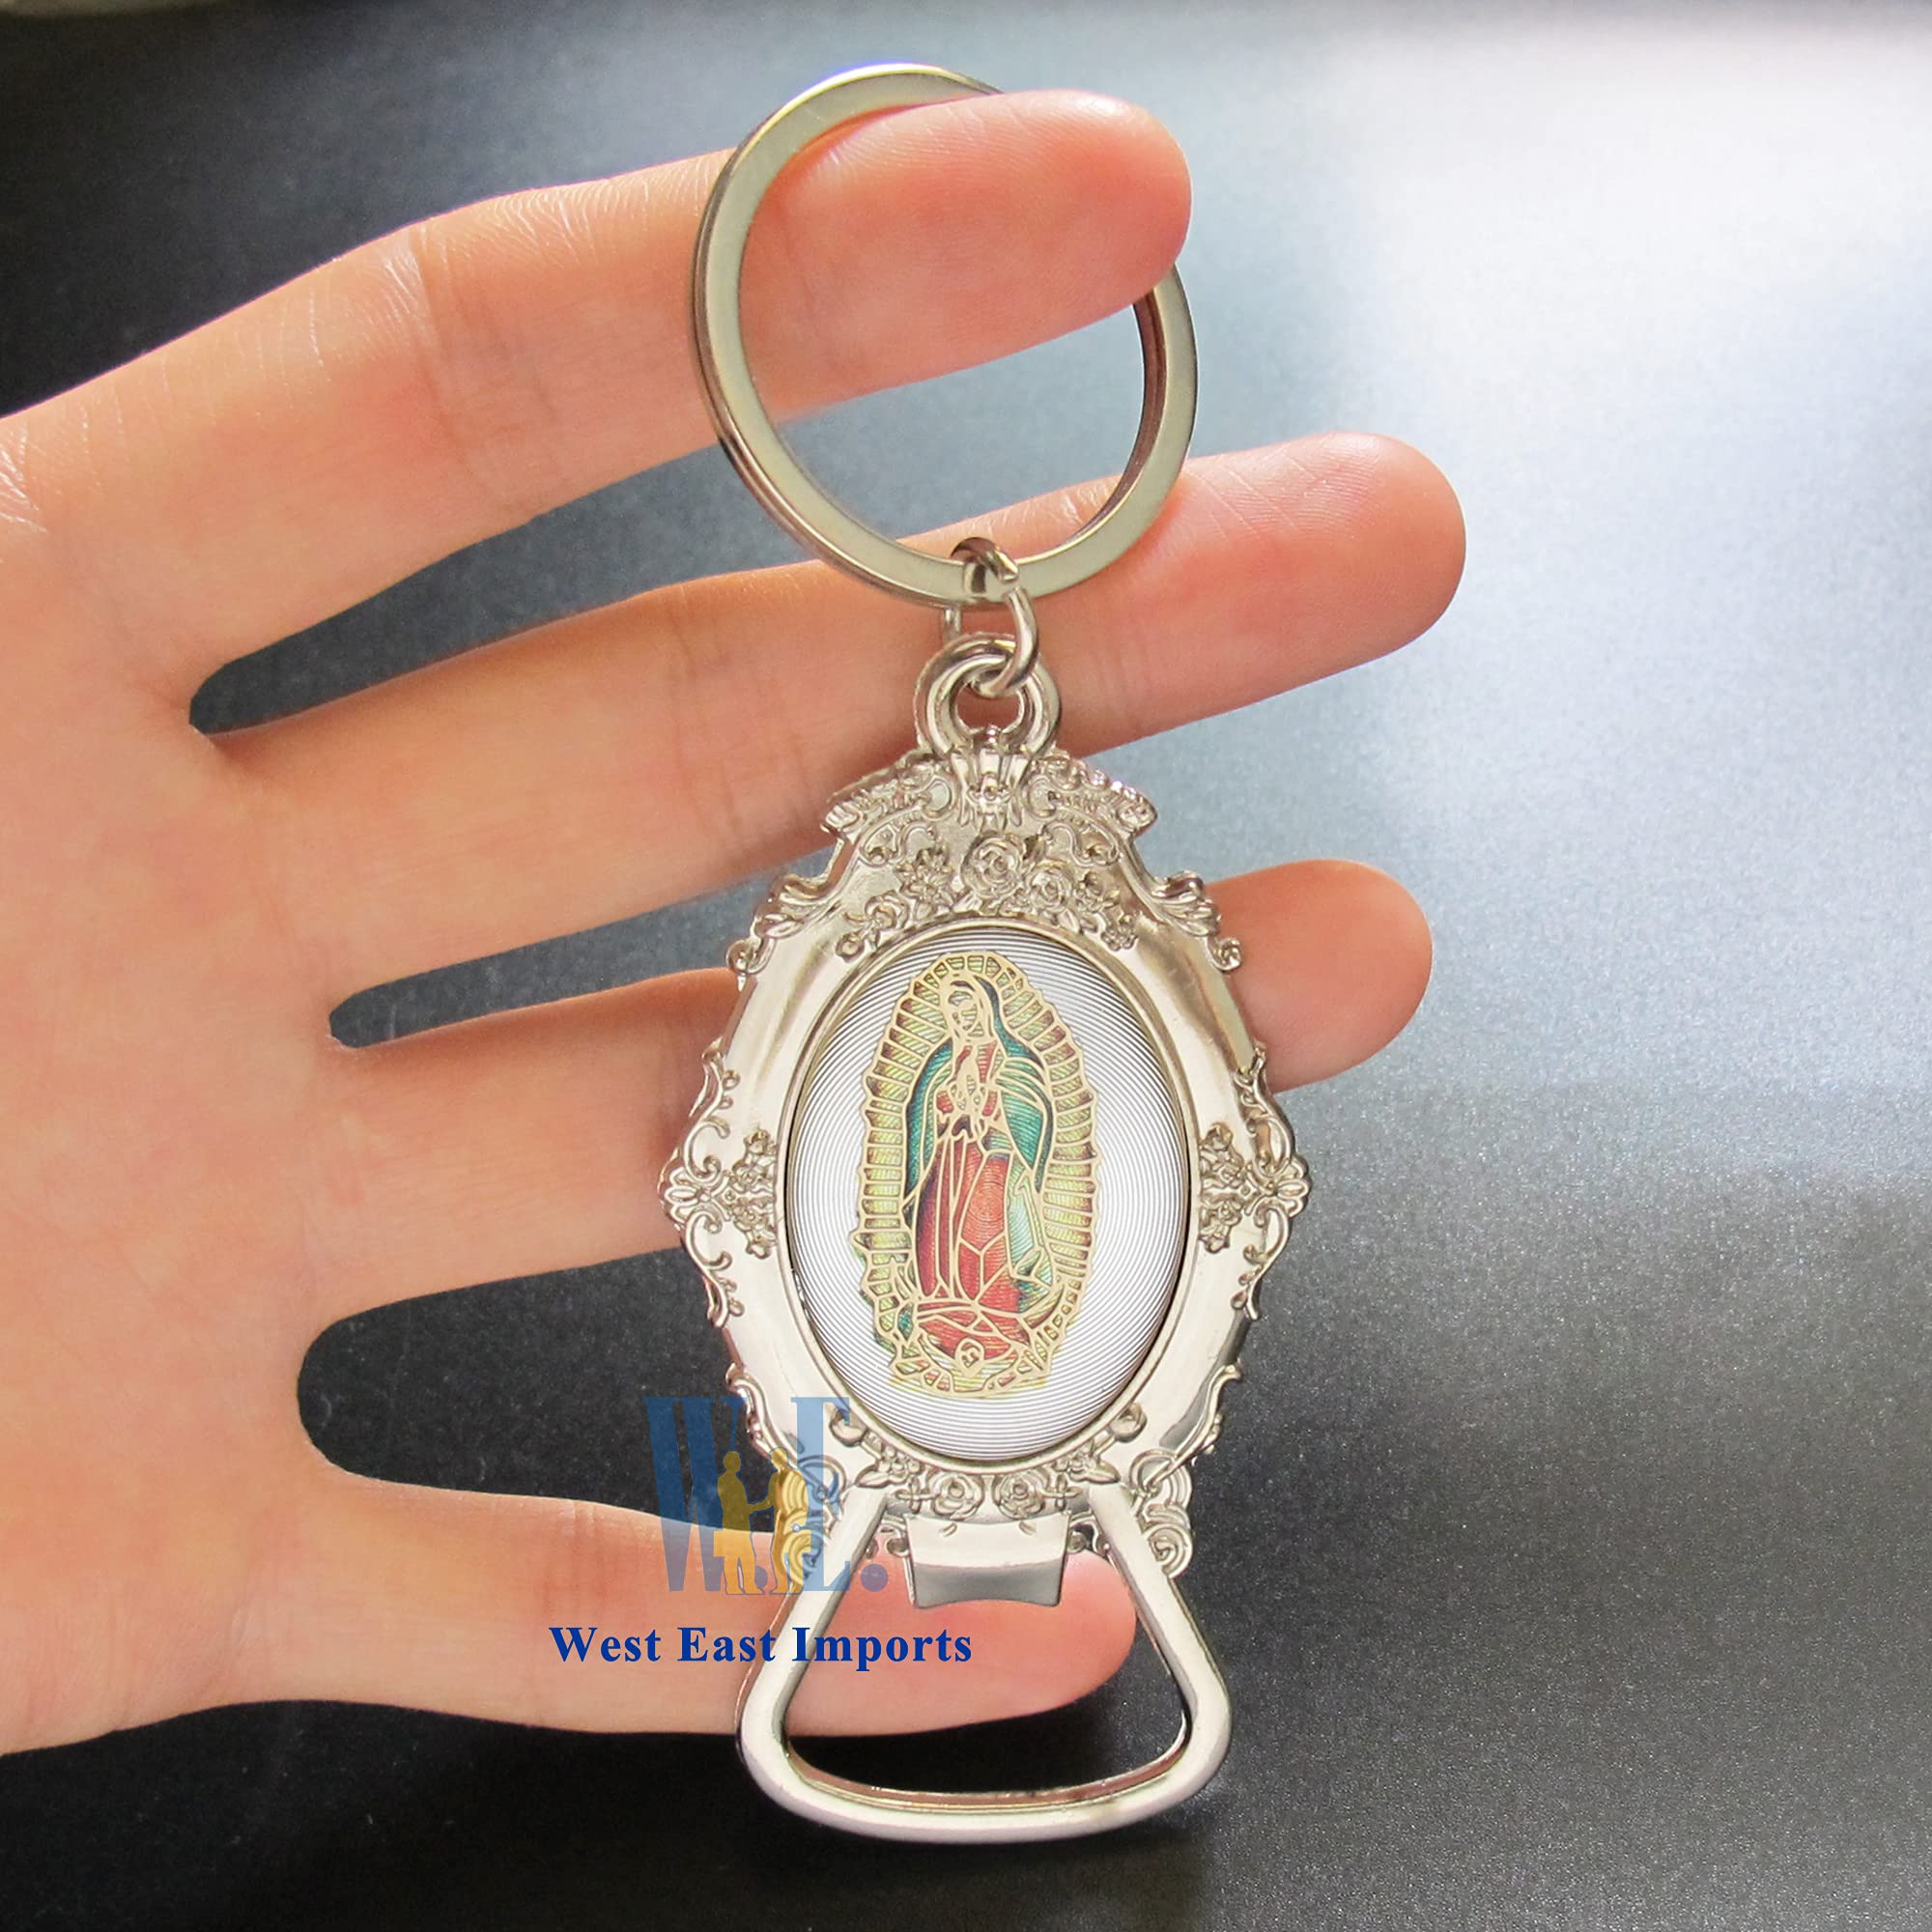 12 Pcs Our Lady of Guadalupe Bottle Opener Keychain Baptism Favor First Communion Gift Recuerdos de Bautizo